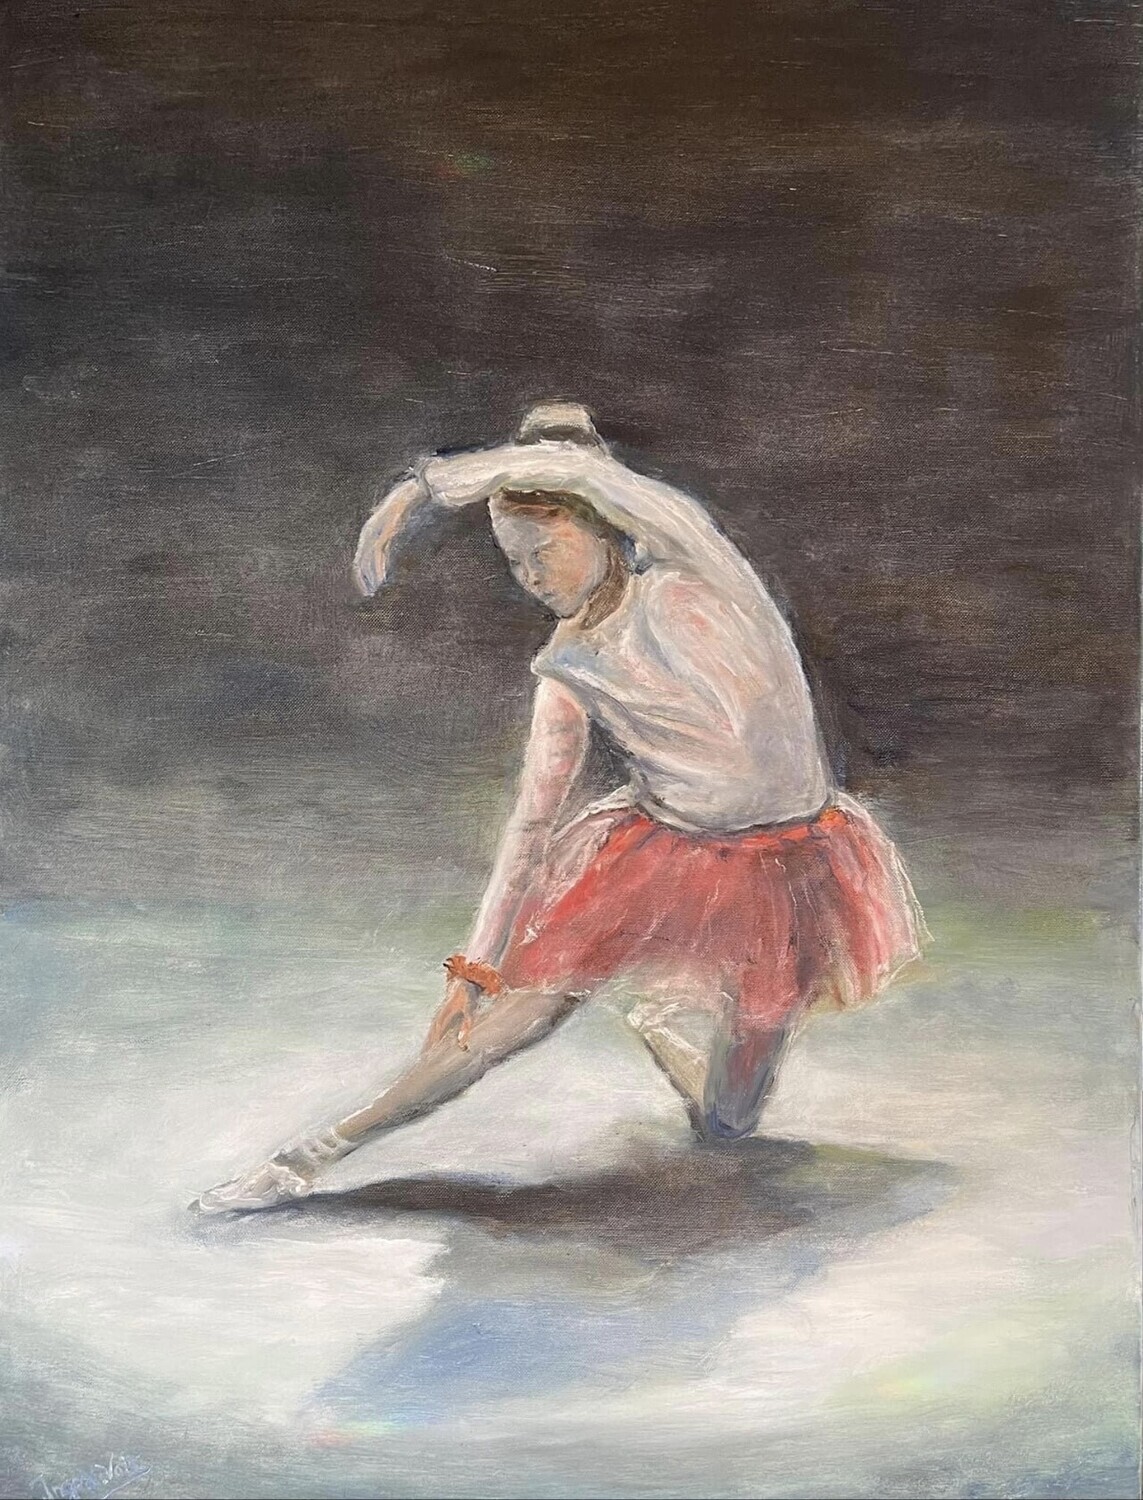 Ung ballerina